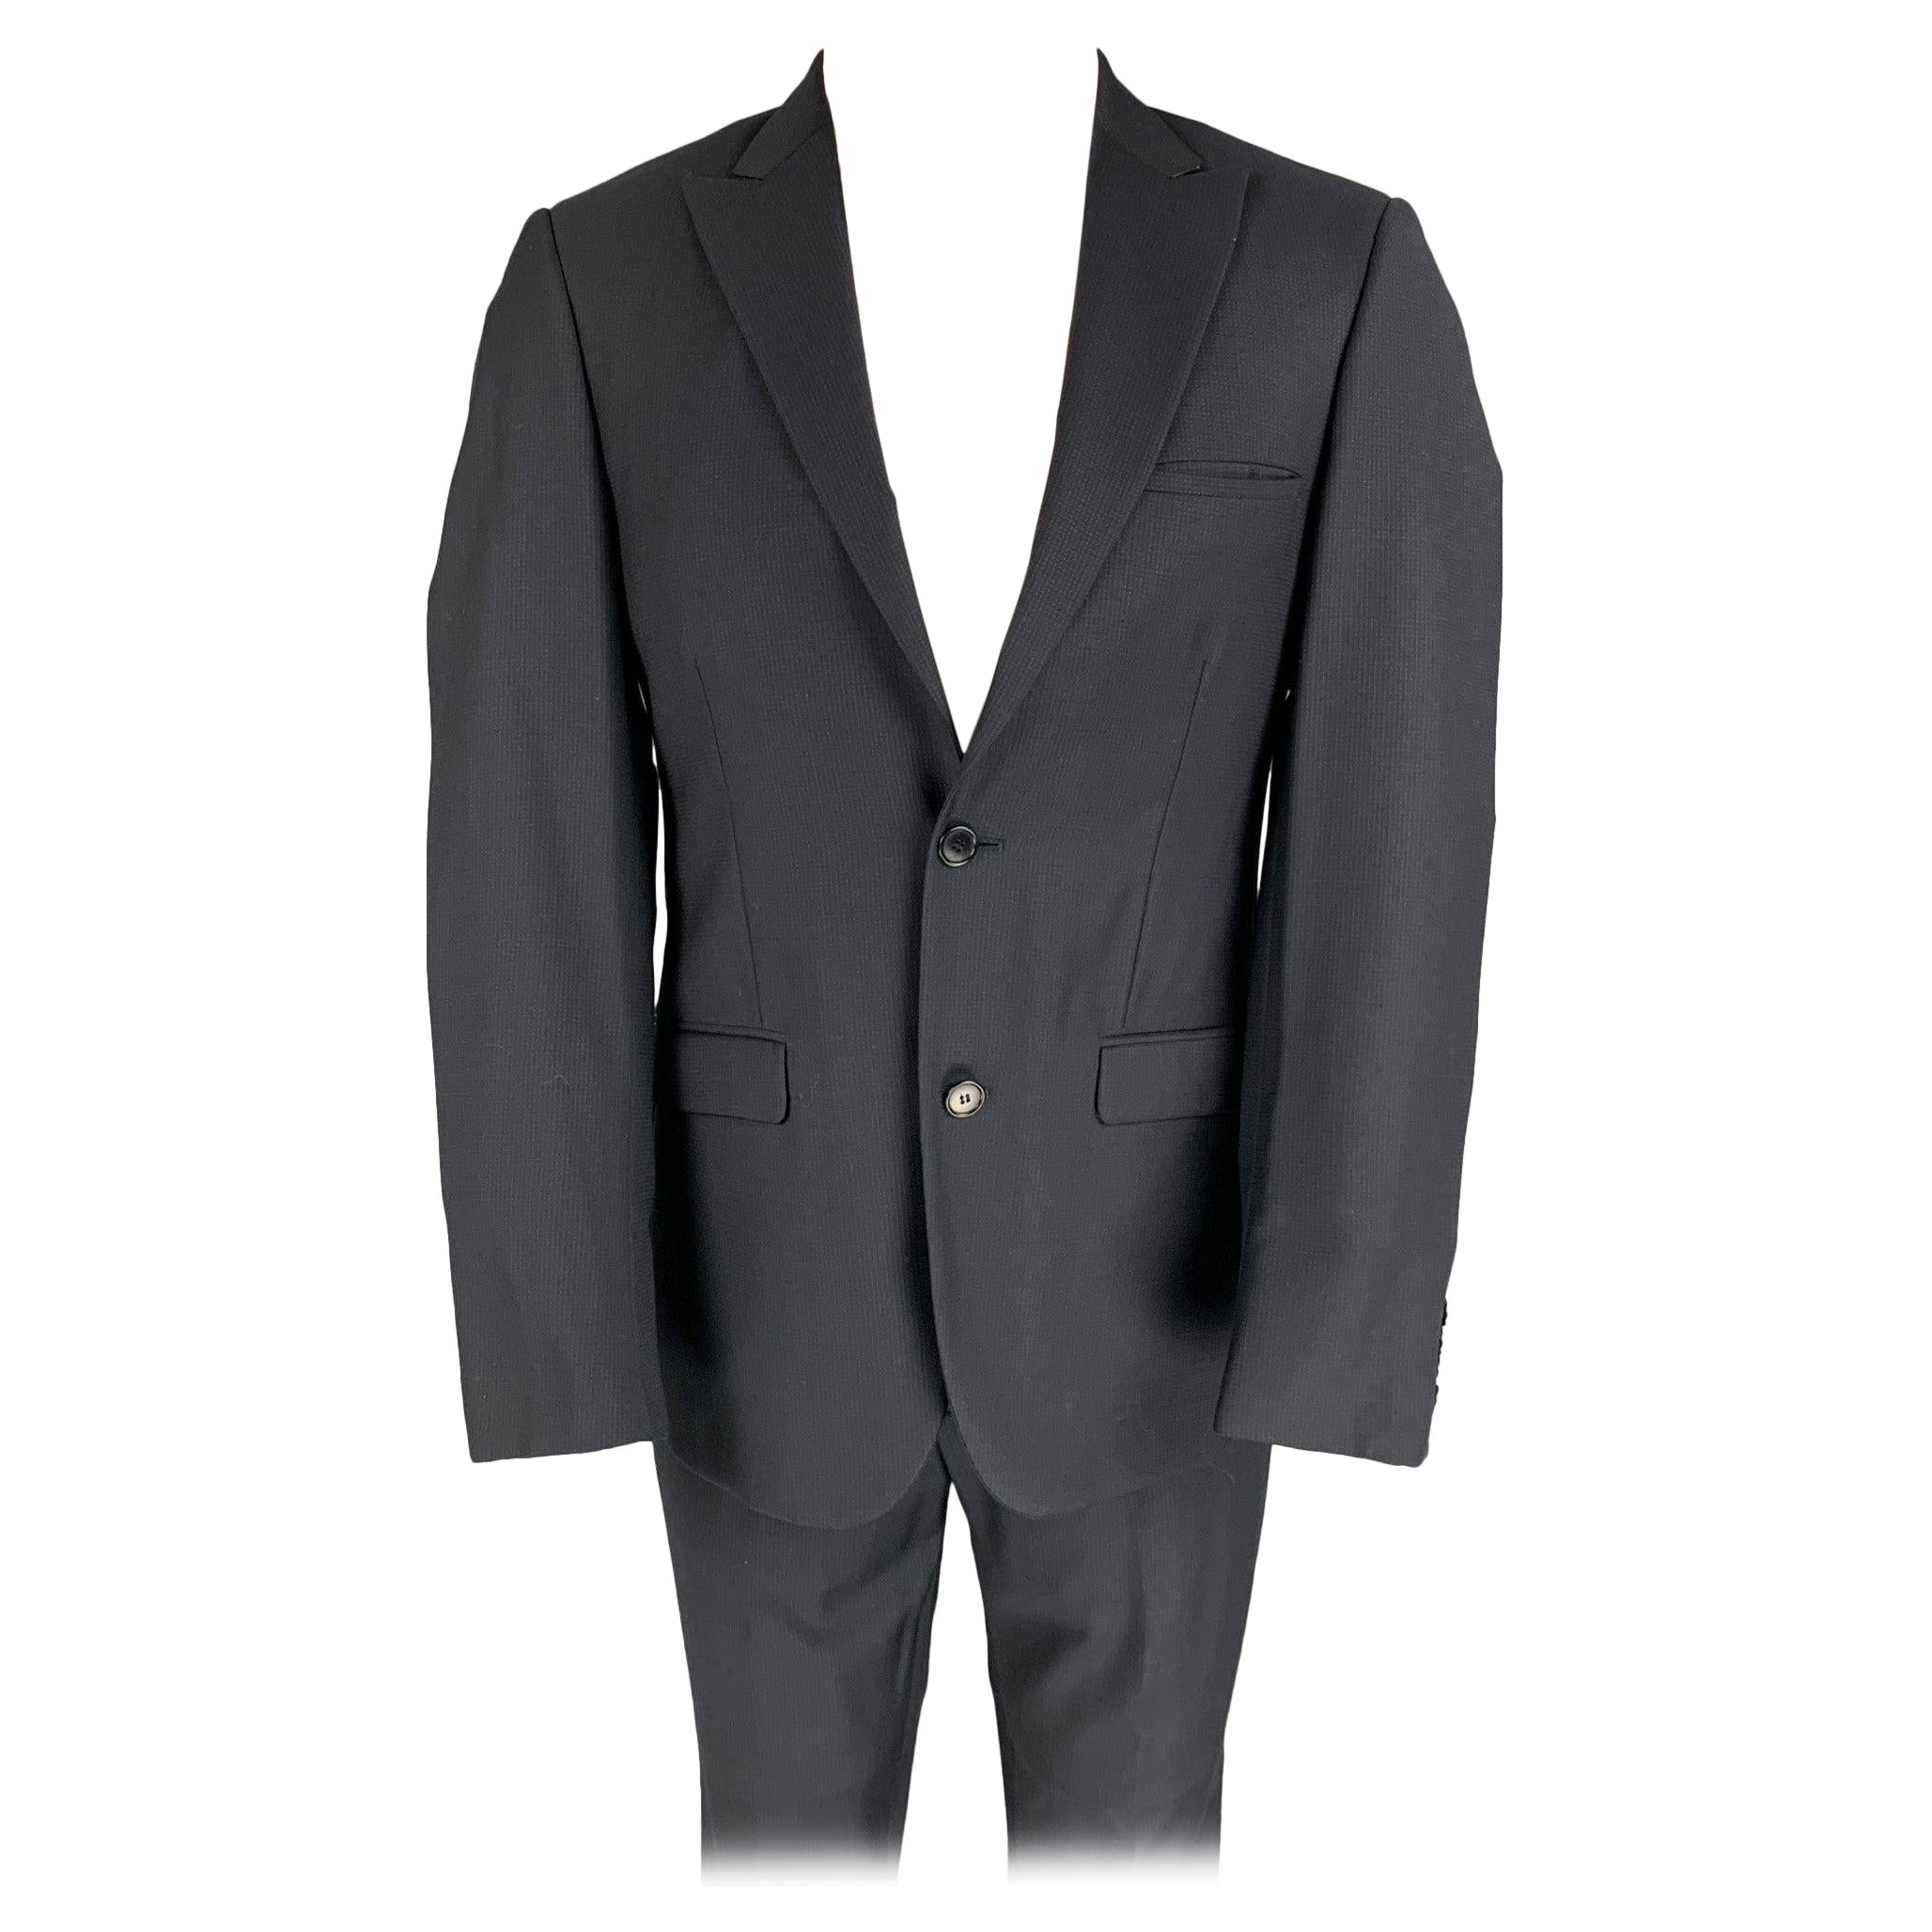 CALVIN KLEIN COLLECTION Size 36 Navy Grid Wool Peak Lapel Suit For Sale